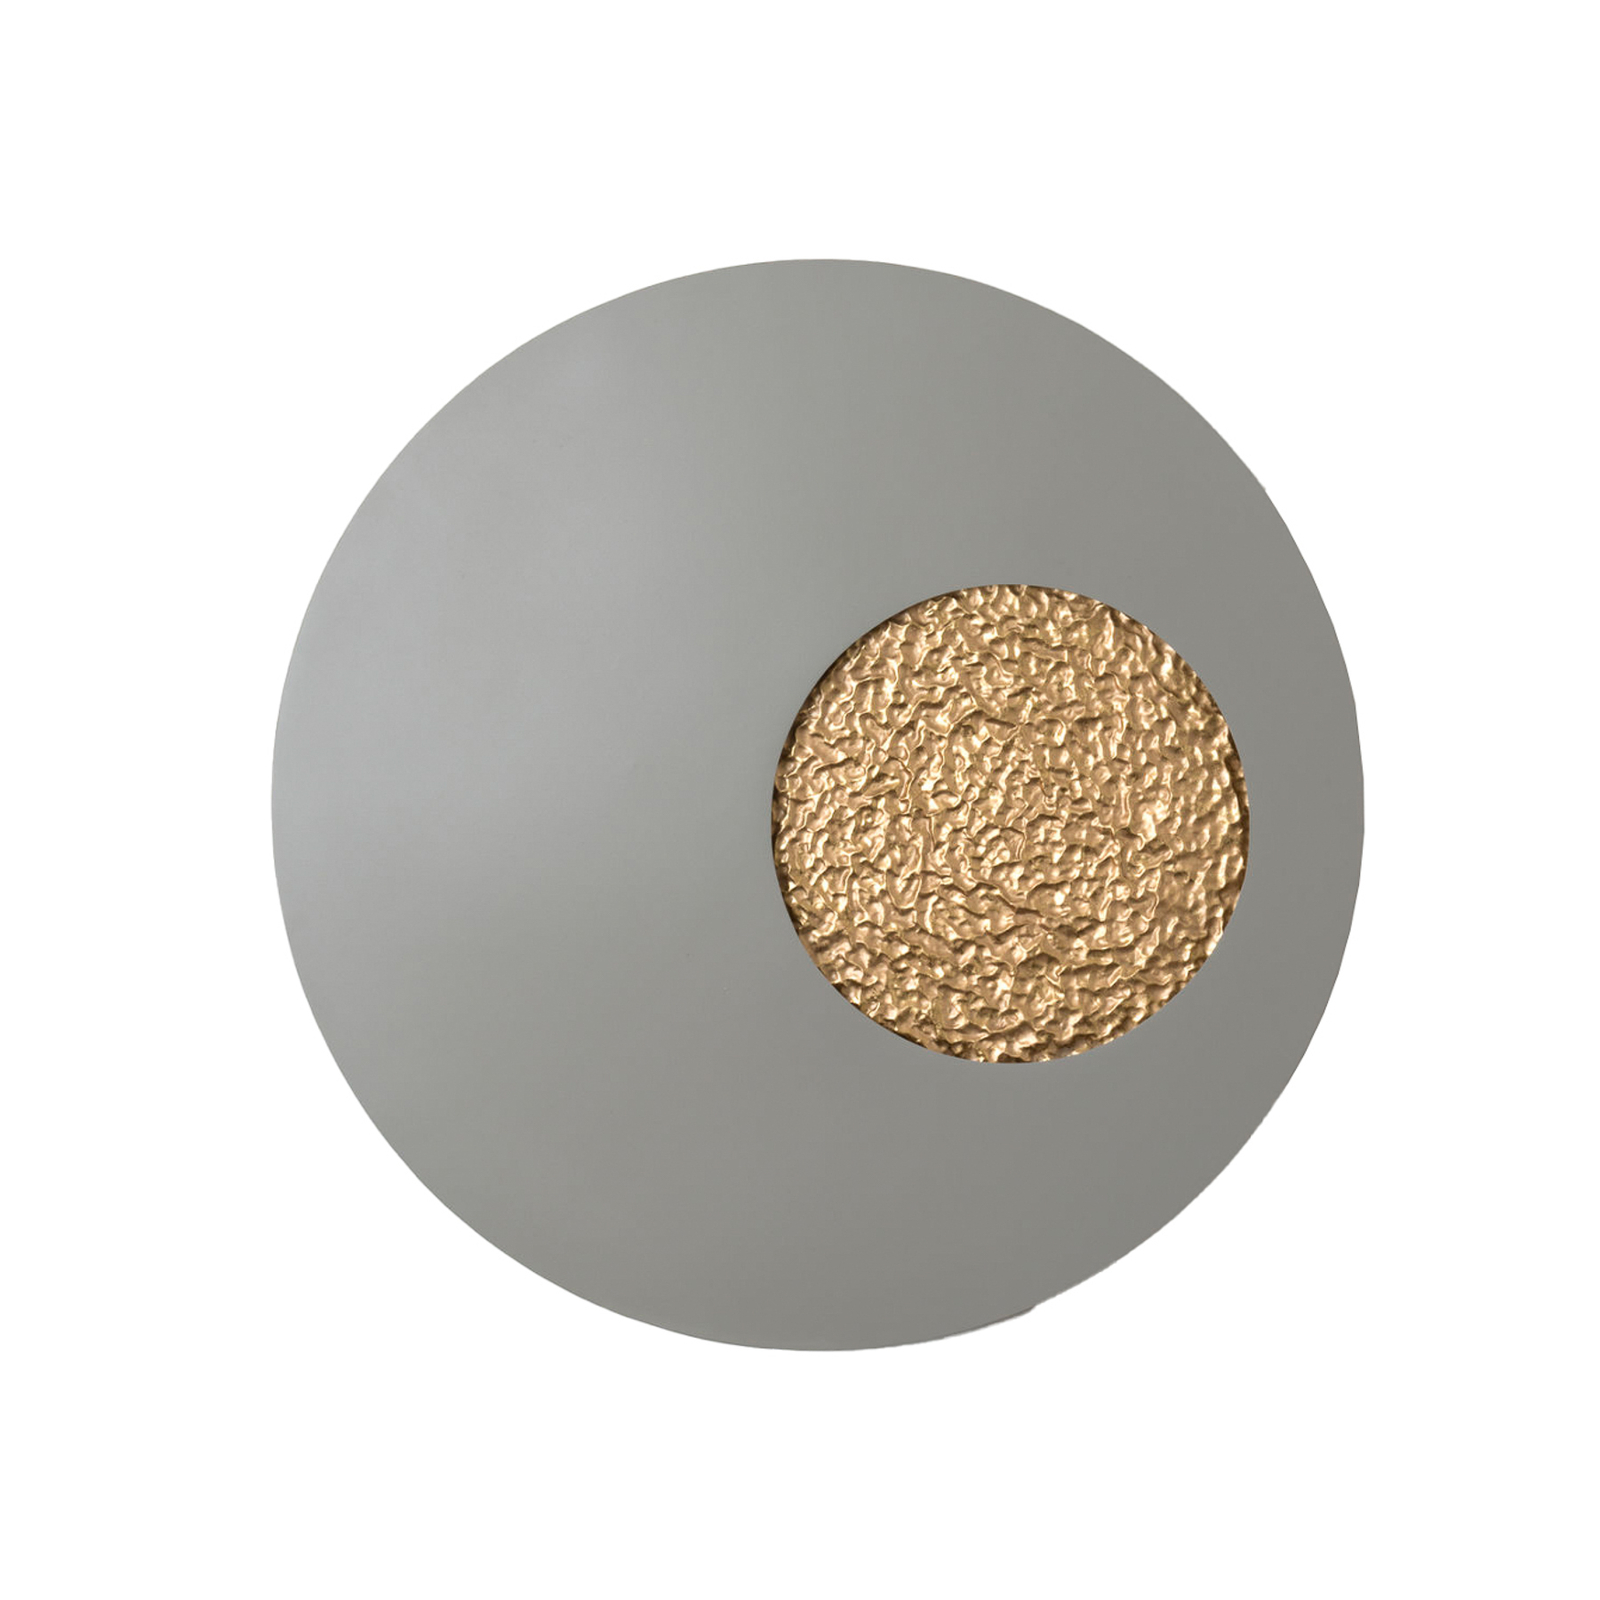 LED-vägglampa Luna, grå/guldfärgad, Ø 80 cm, järn